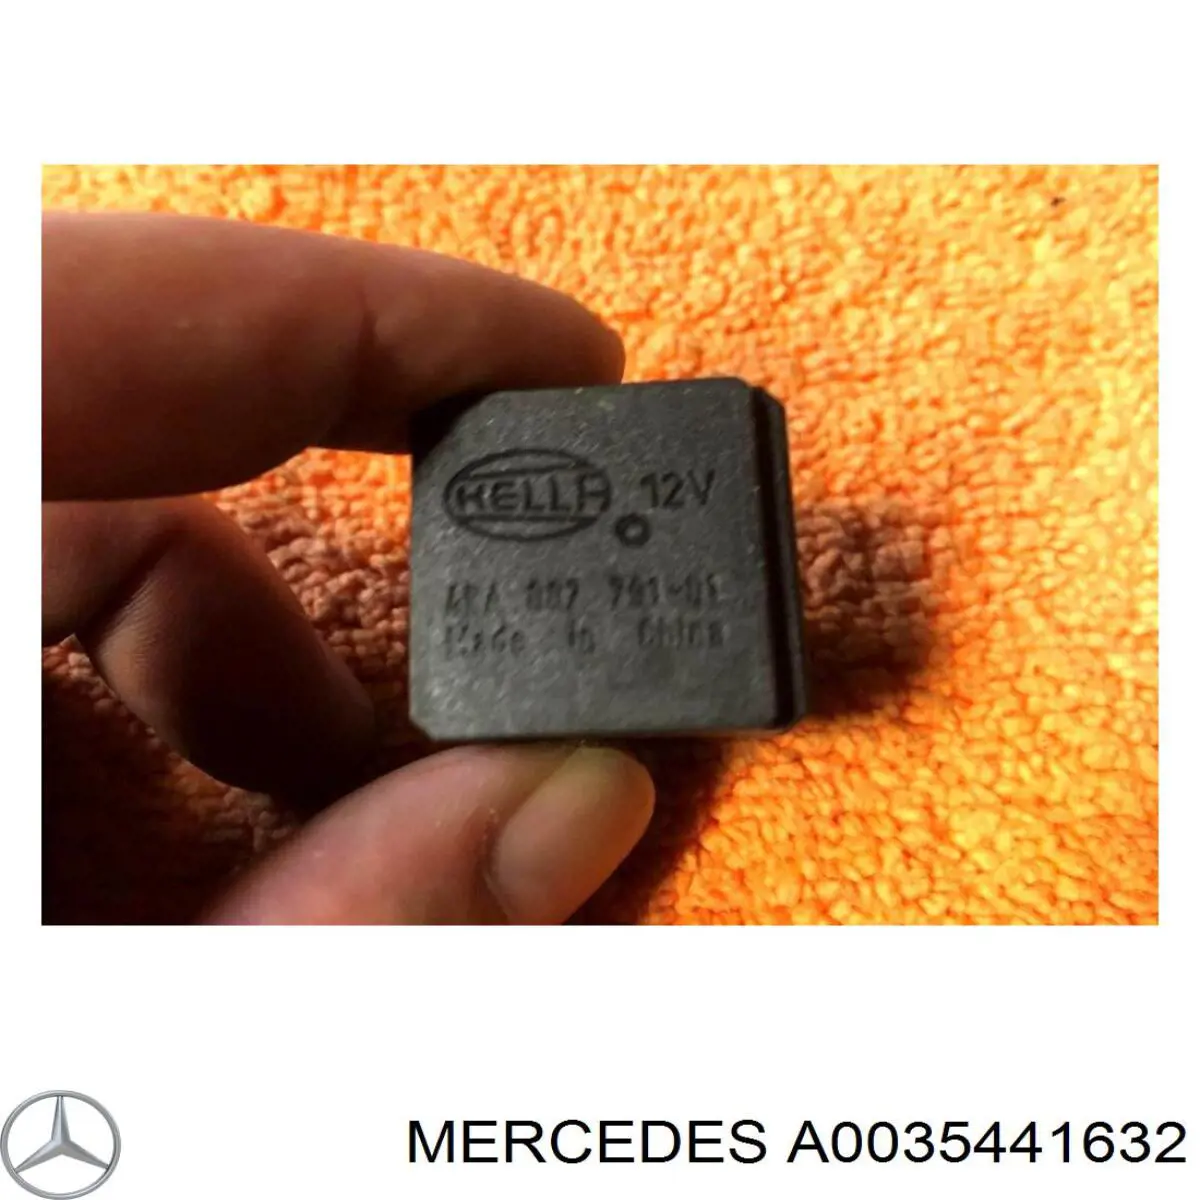 35441632 Mercedes relé, piloto intermitente